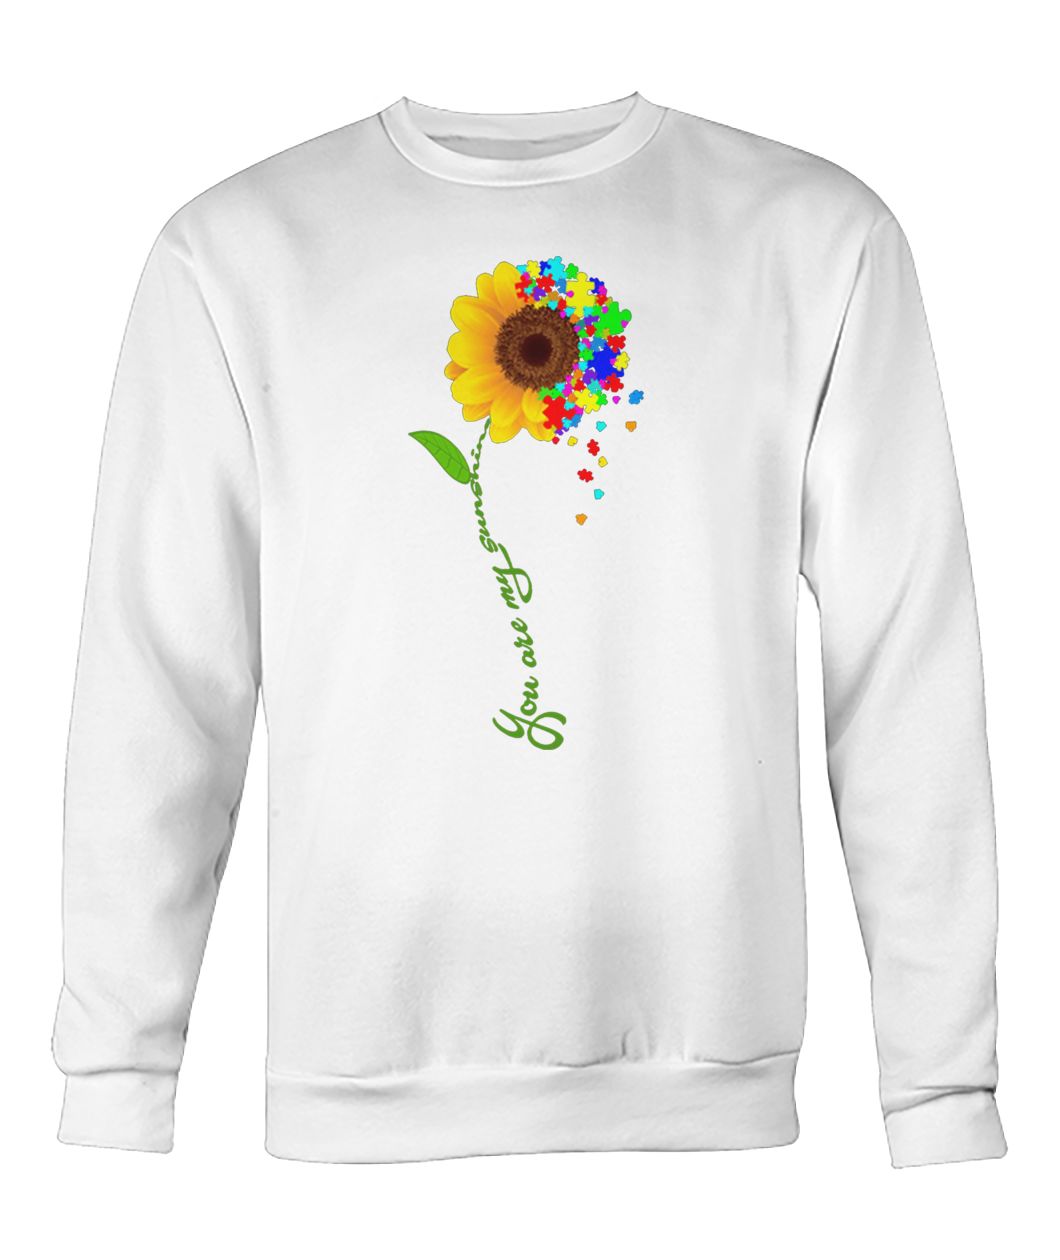 You are my sunshine sunflower autism awareness crew neck sweatshirt